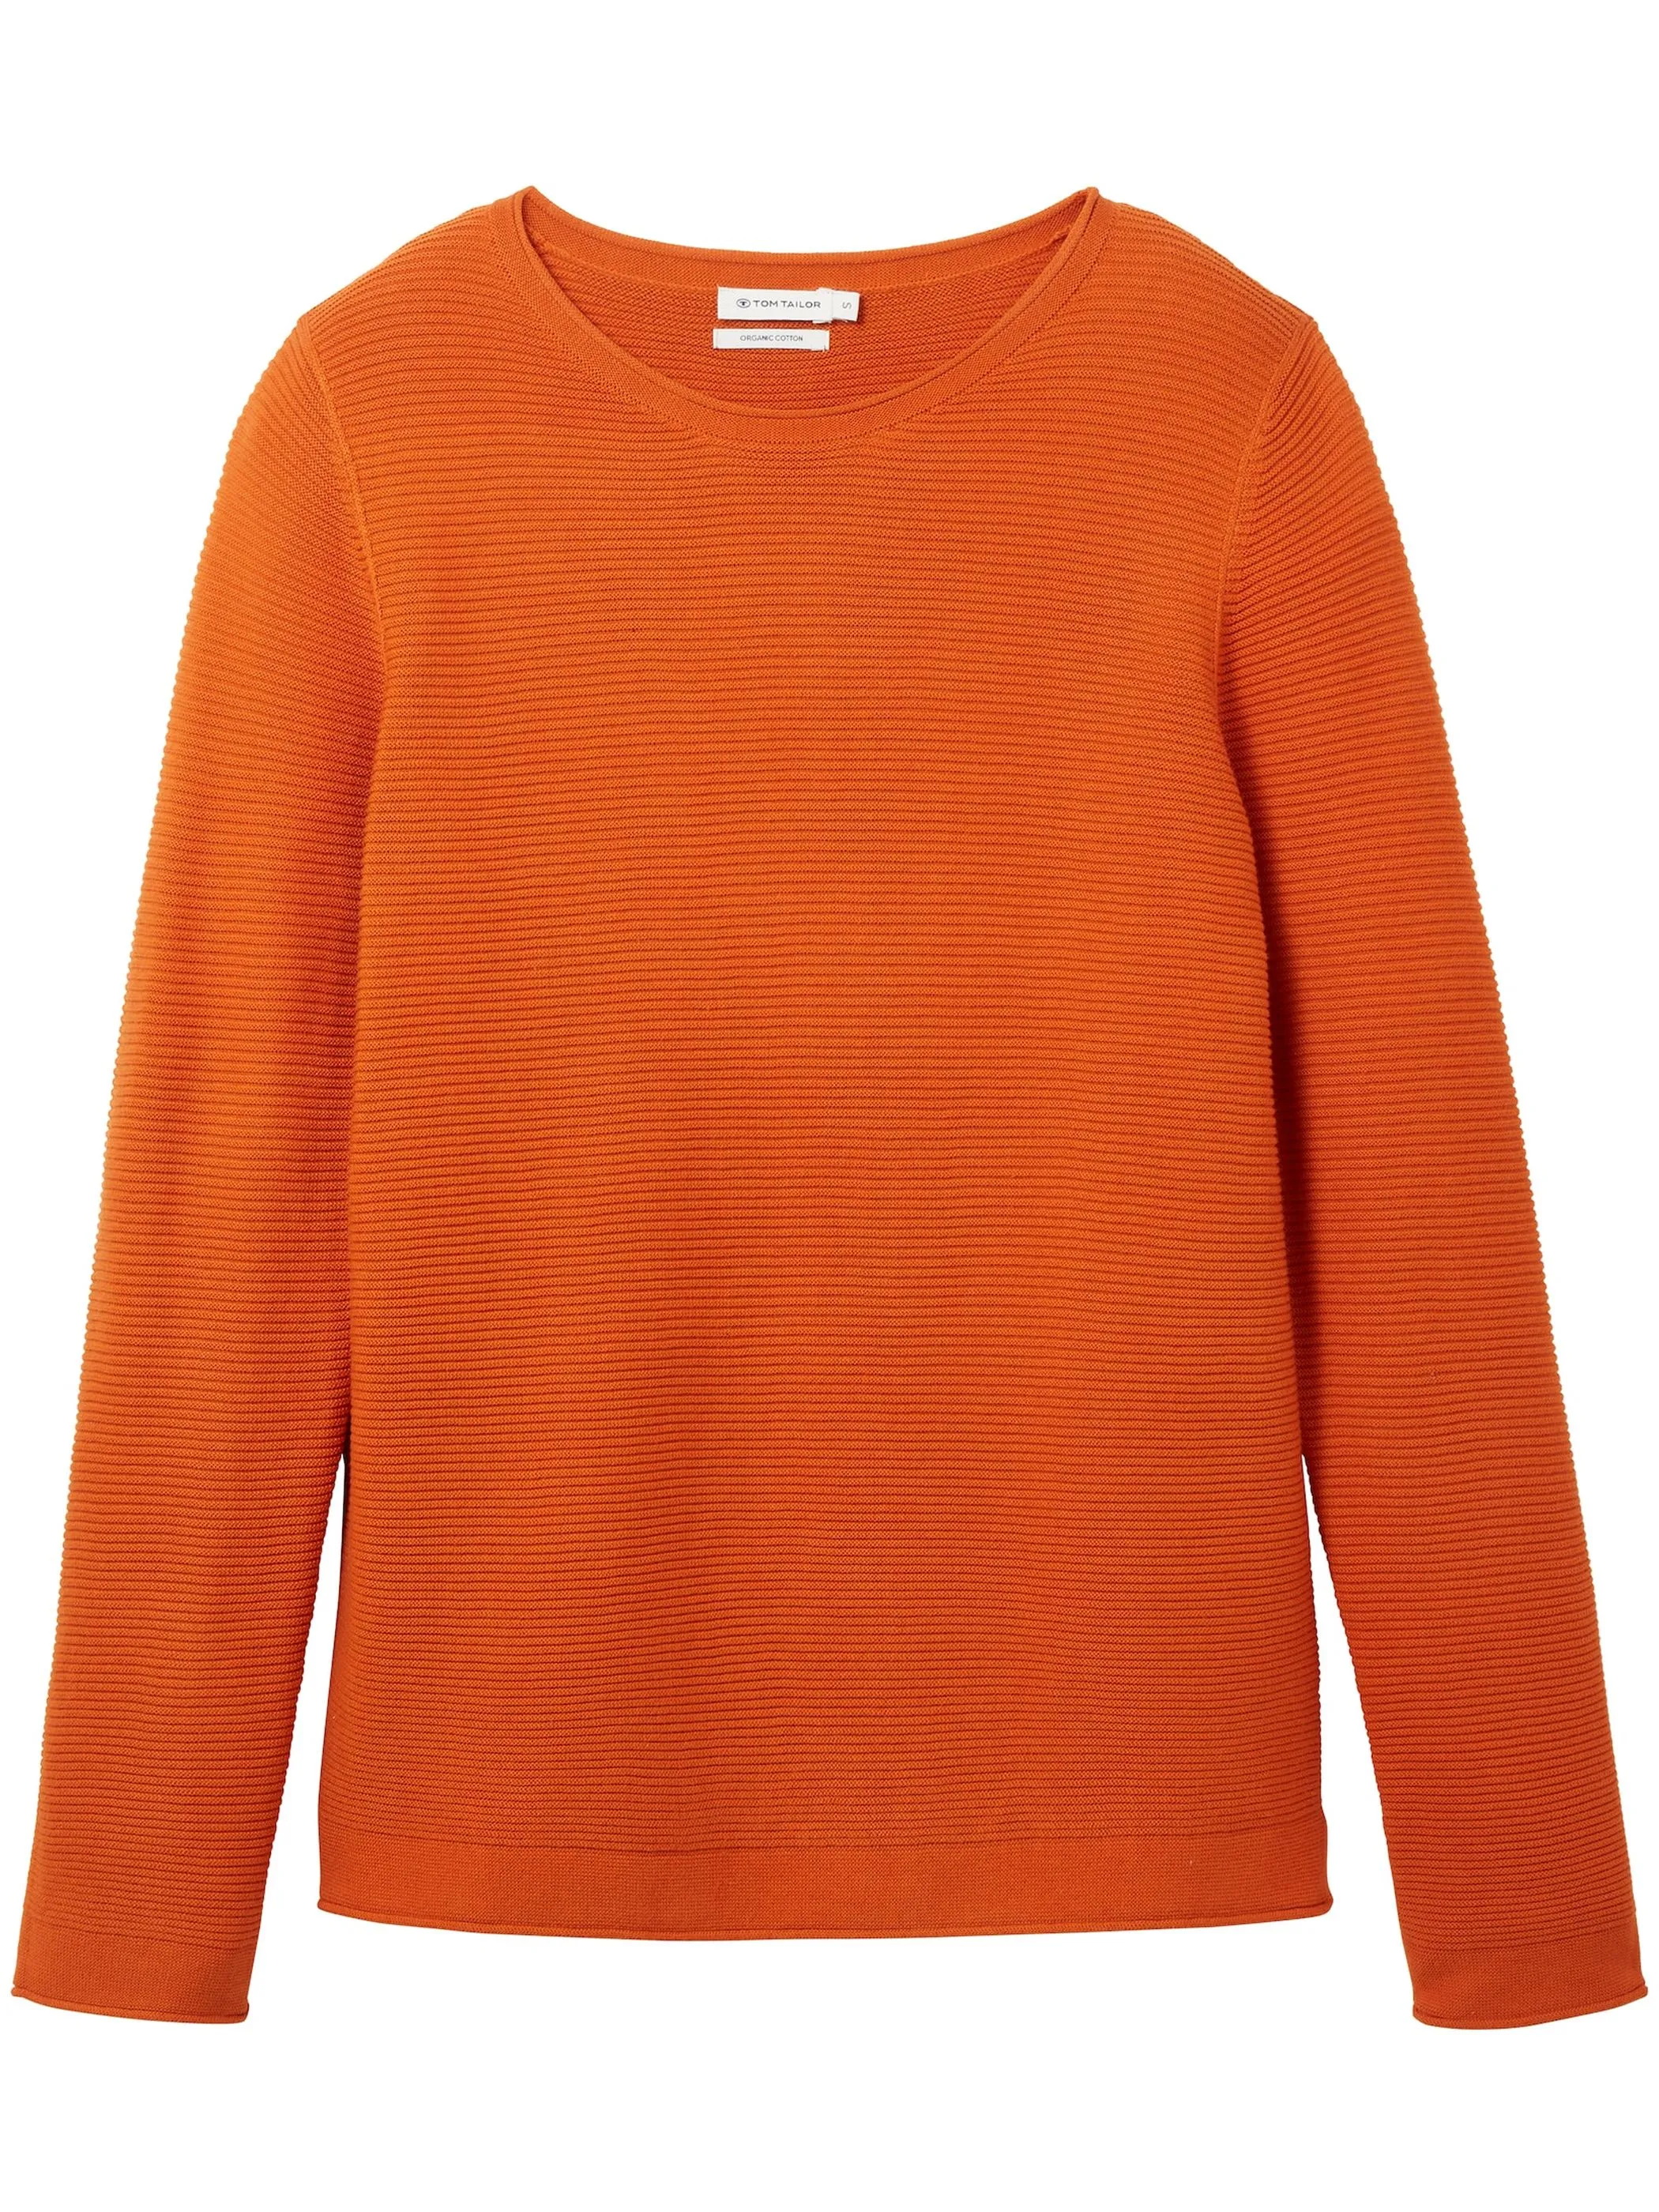 Tom Tailor 1016350 NOS sweater new ottoma Orange 827729 19772 1